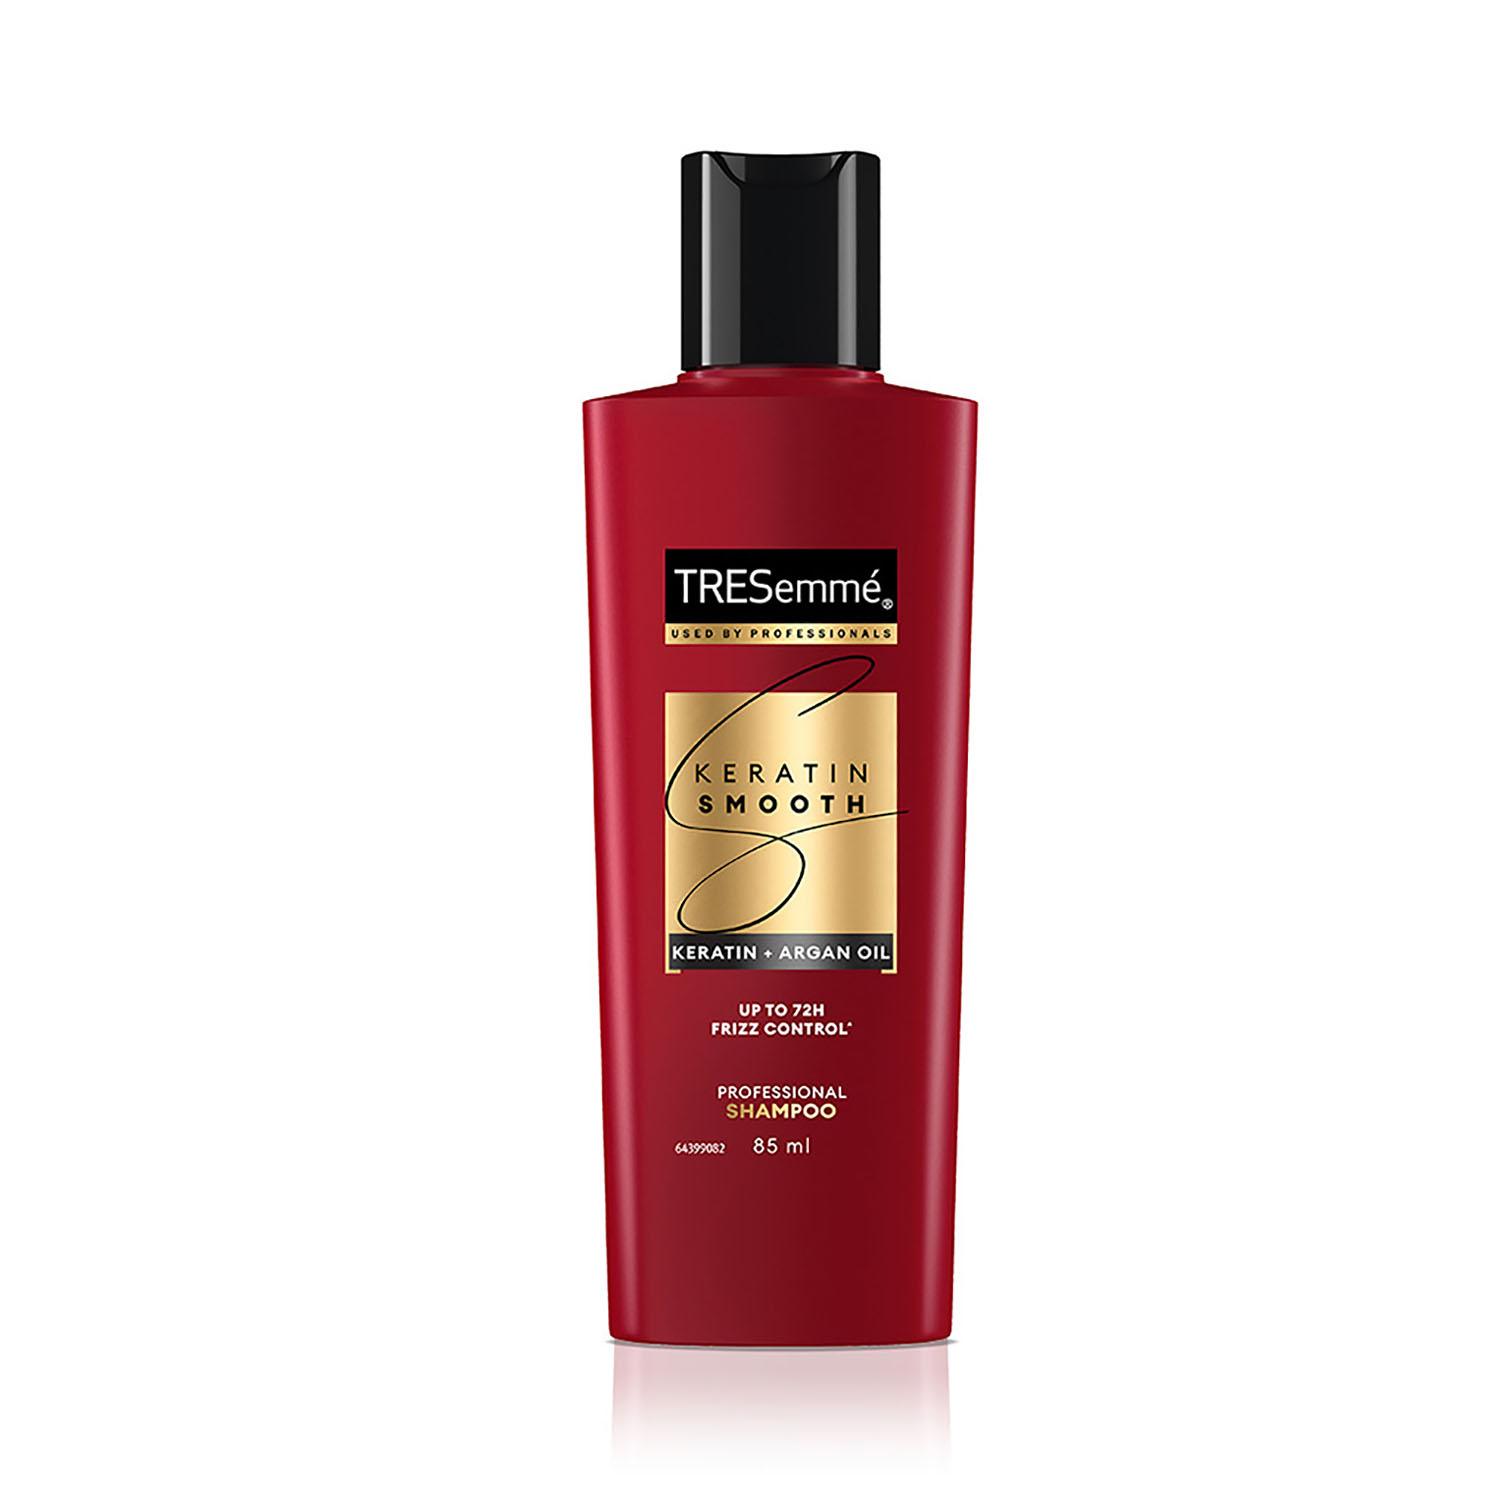 Tresemme | TRESemme Keratin Smooth Shampoo (85 ml)